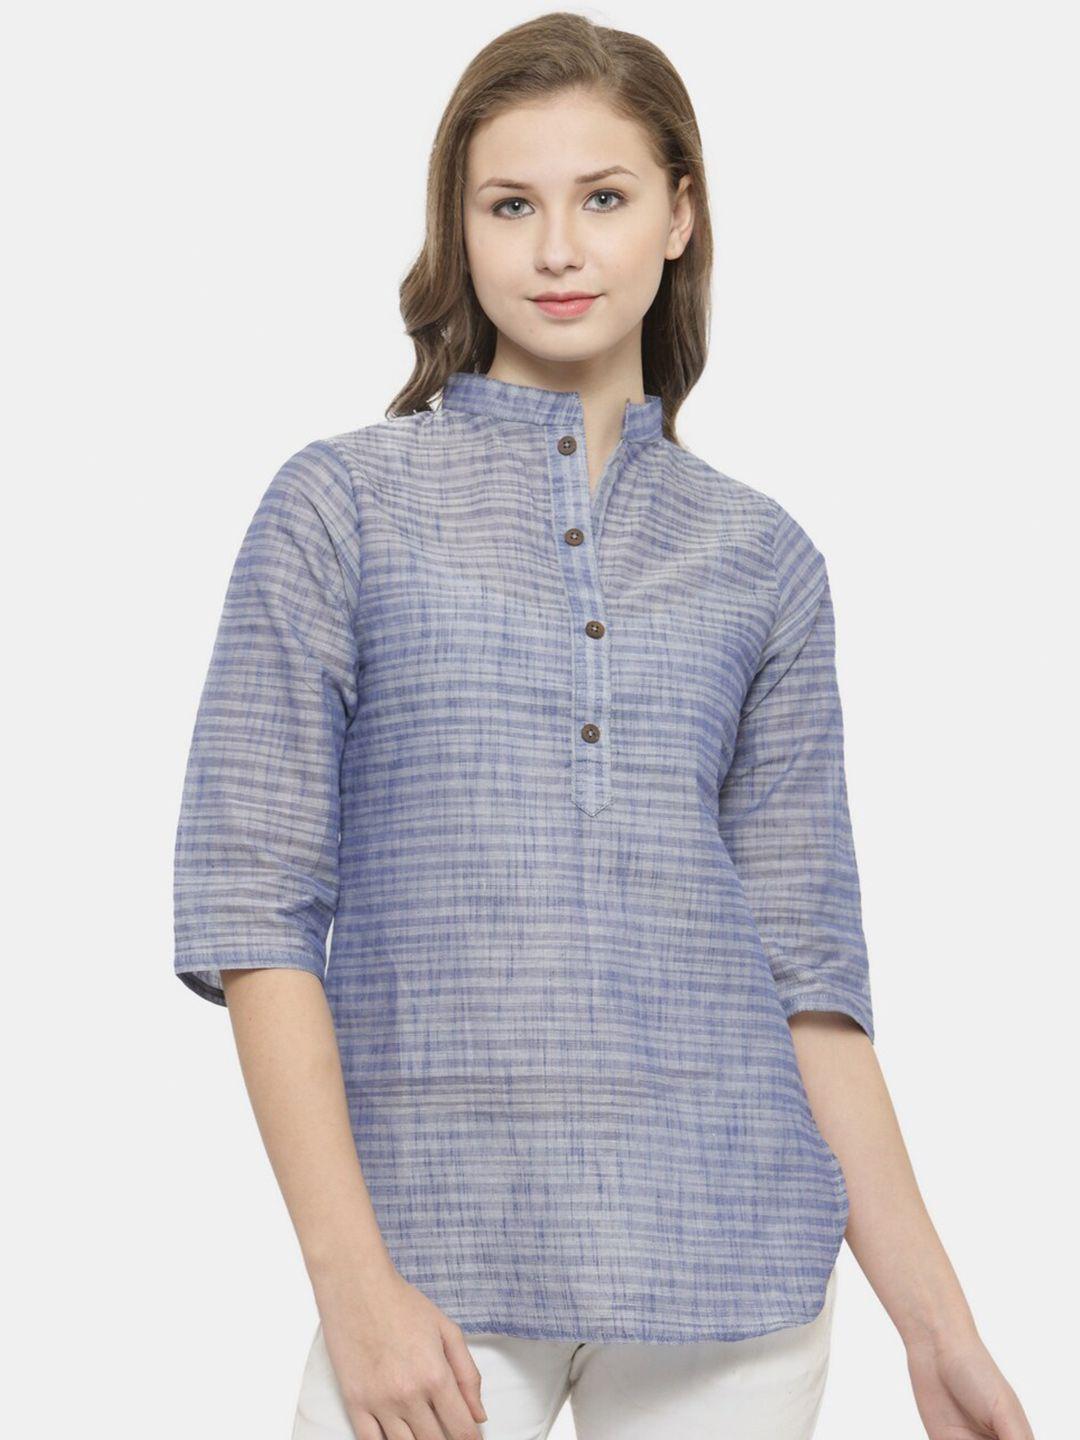 enchanted drapes blue striped mandarin collar pure cotton shirt style top